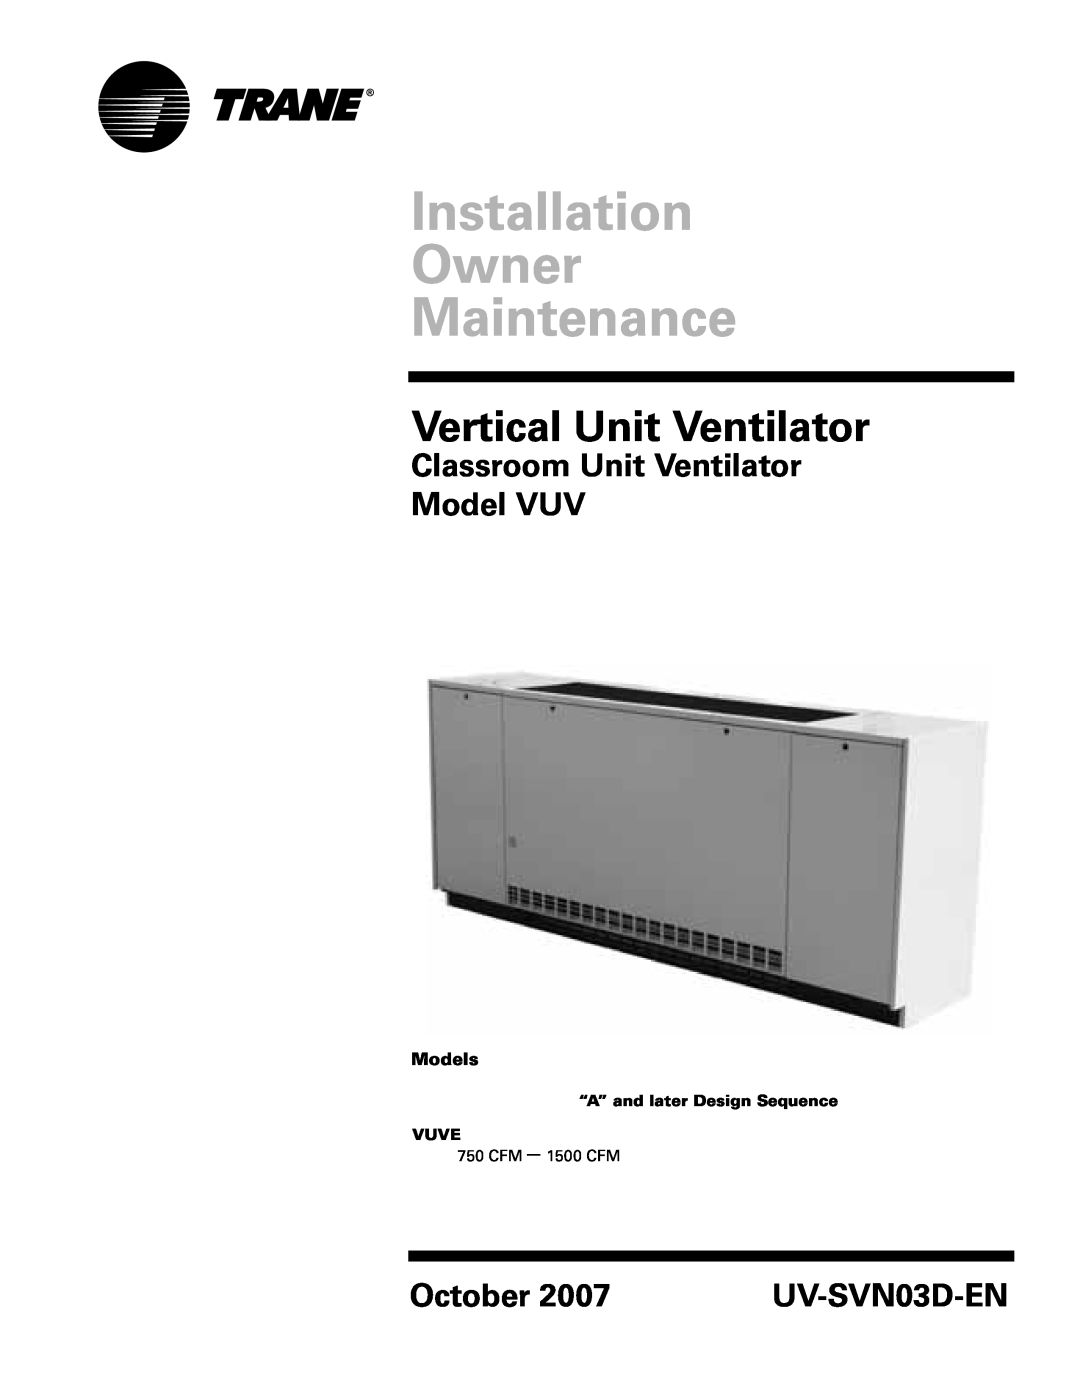 Trane 750 CFM manual Installation Owner Maintenance, Vertical Unit Ventilator, Classroom Unit Ventilator Model VUV 